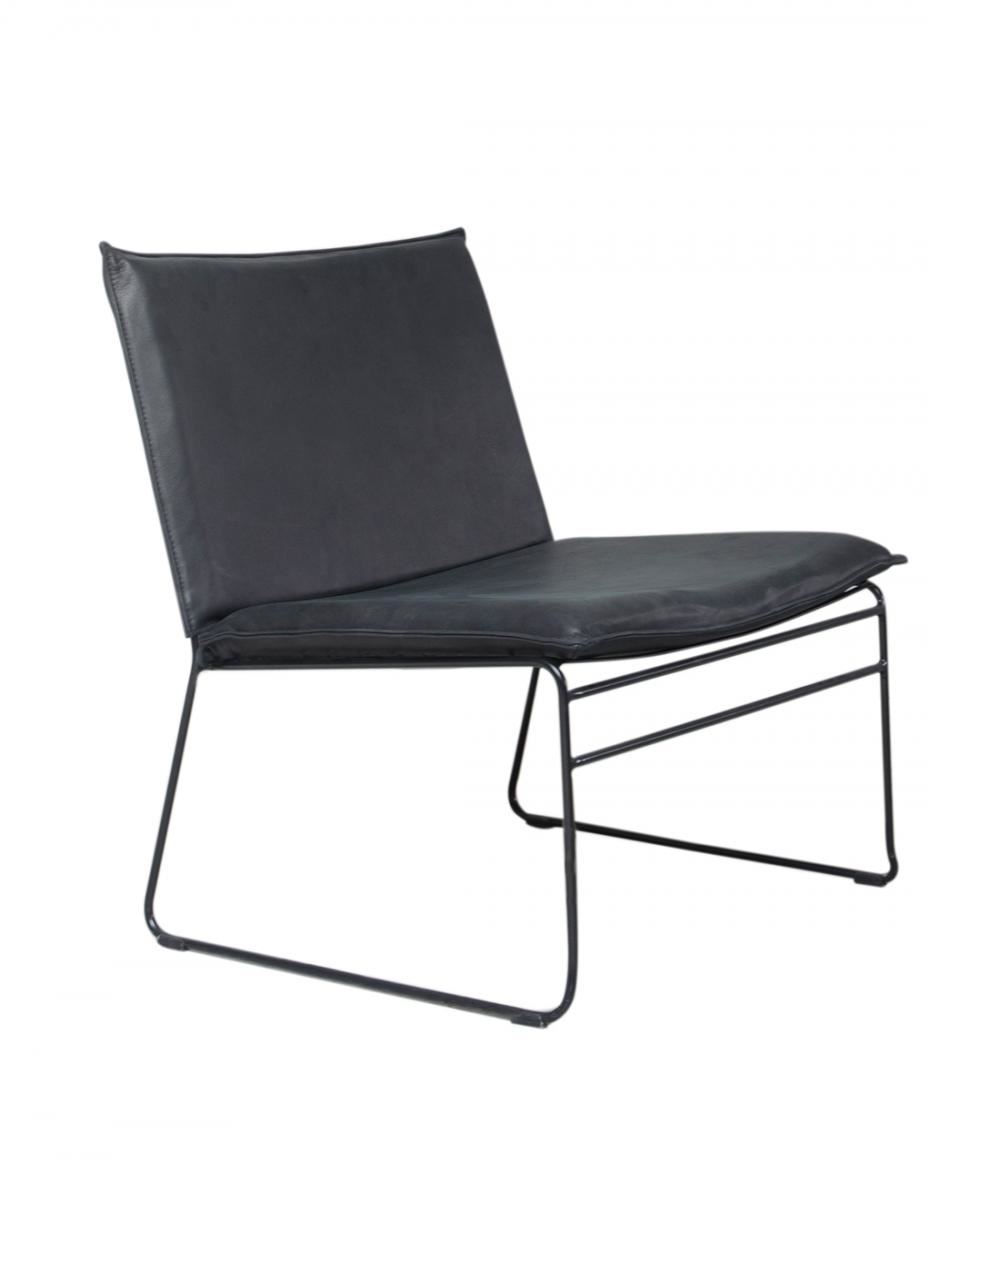 Kyst Lounge Chair Outdoor No Cushion Ottoman No Cushion